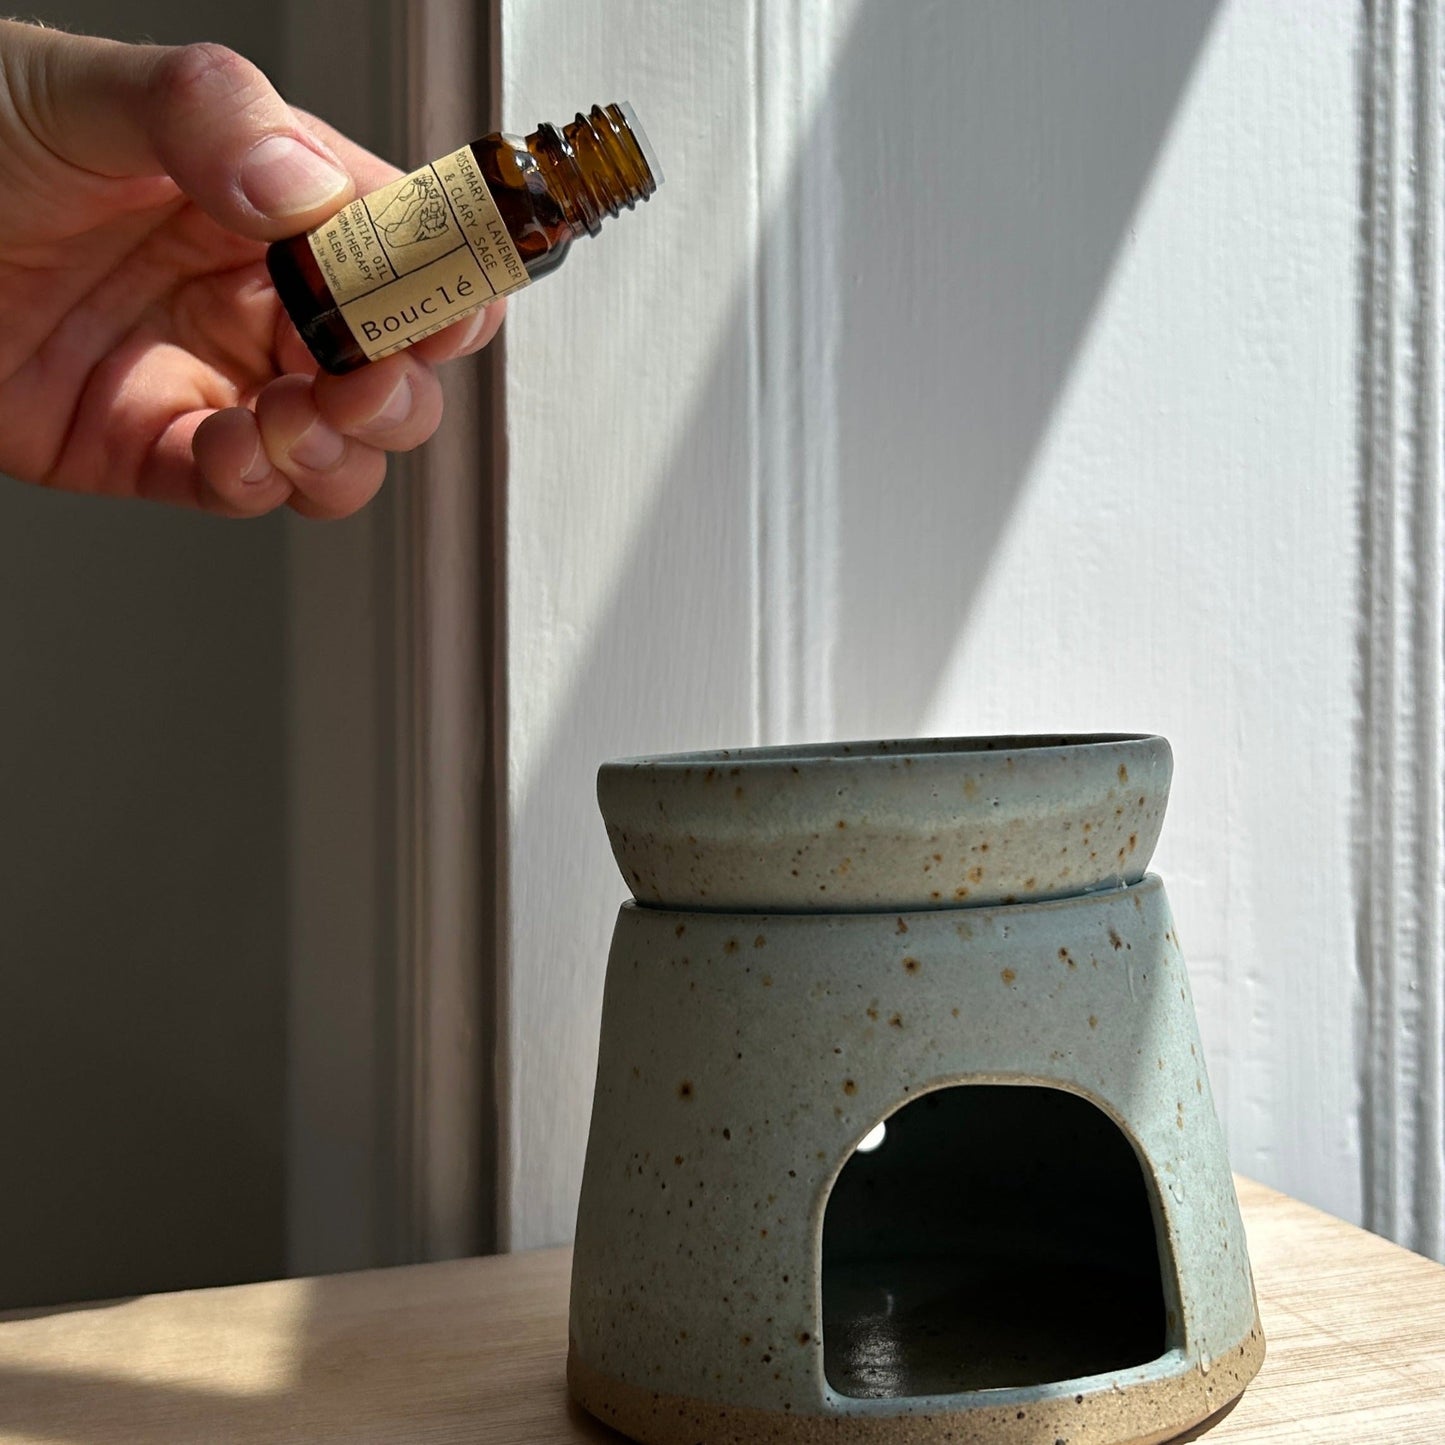 Petitgrain, Siberian Pine & Frankincense Aromatherapy Oil